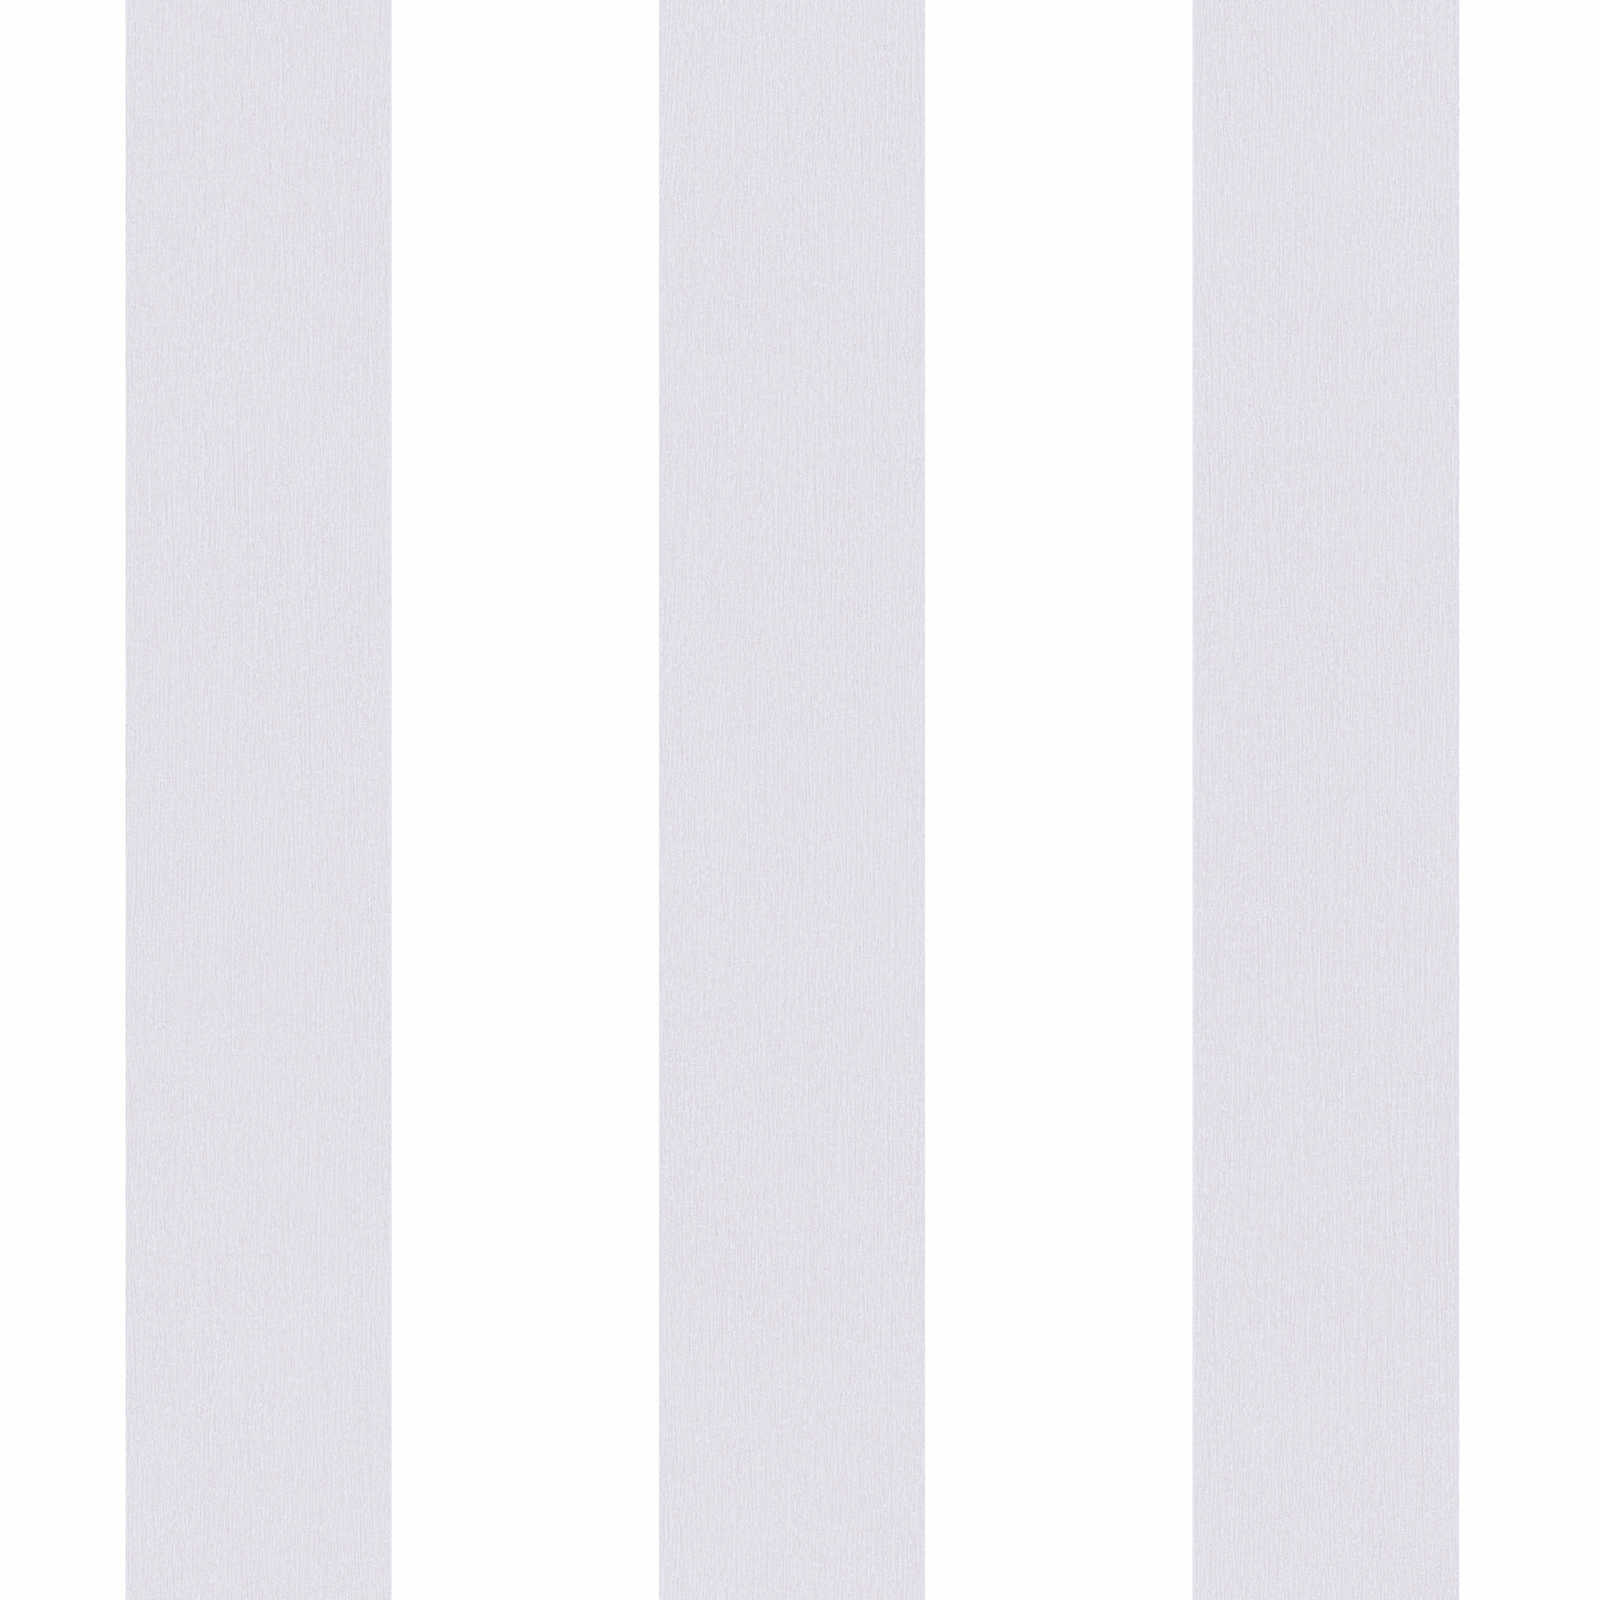 Nursery wallpaper vertical stripes - grey, white
